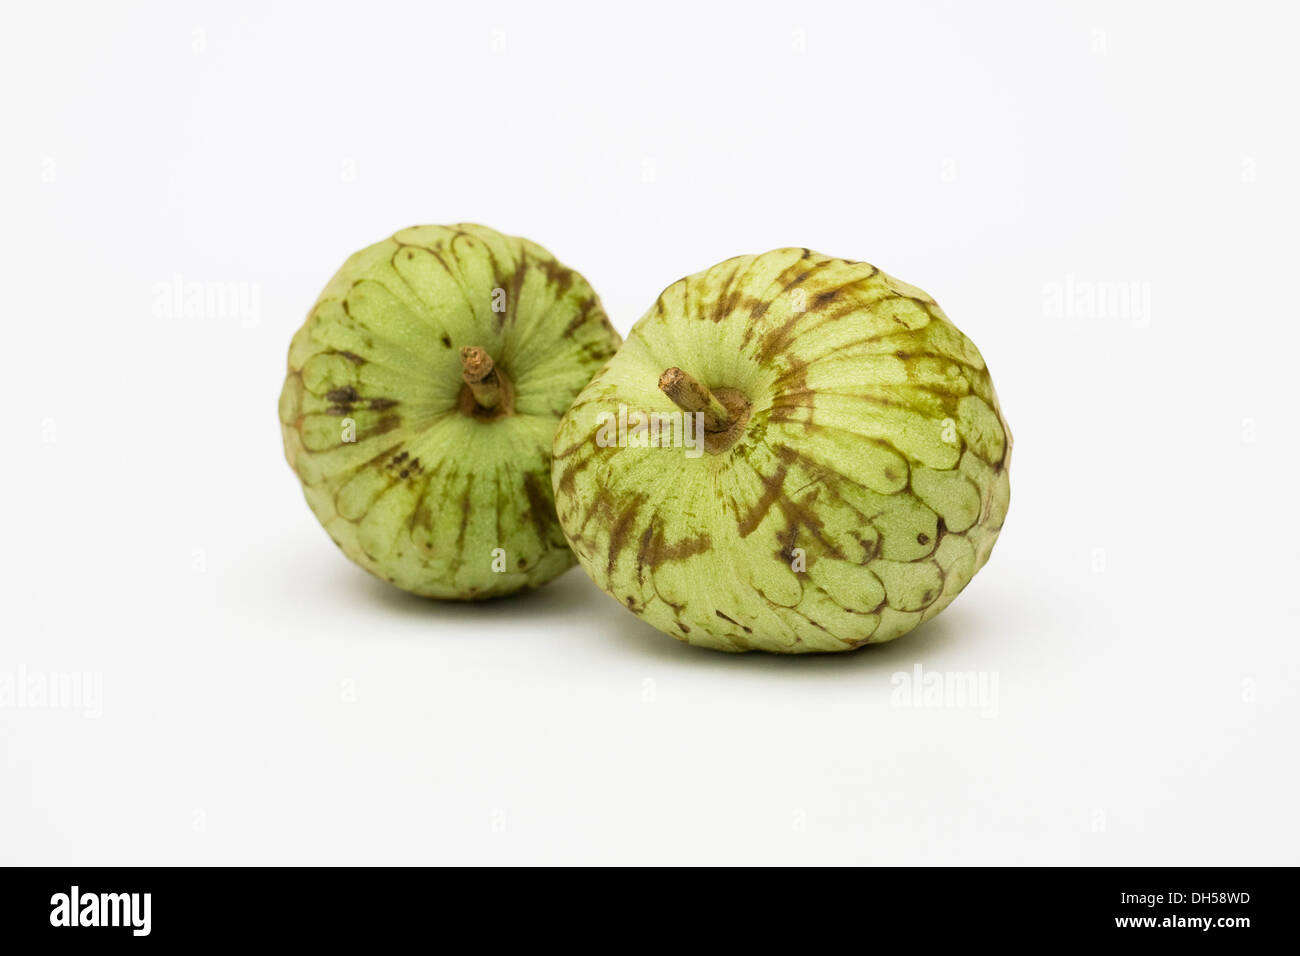 Cherimoya. Two custard apples on a white background. Stock Photo